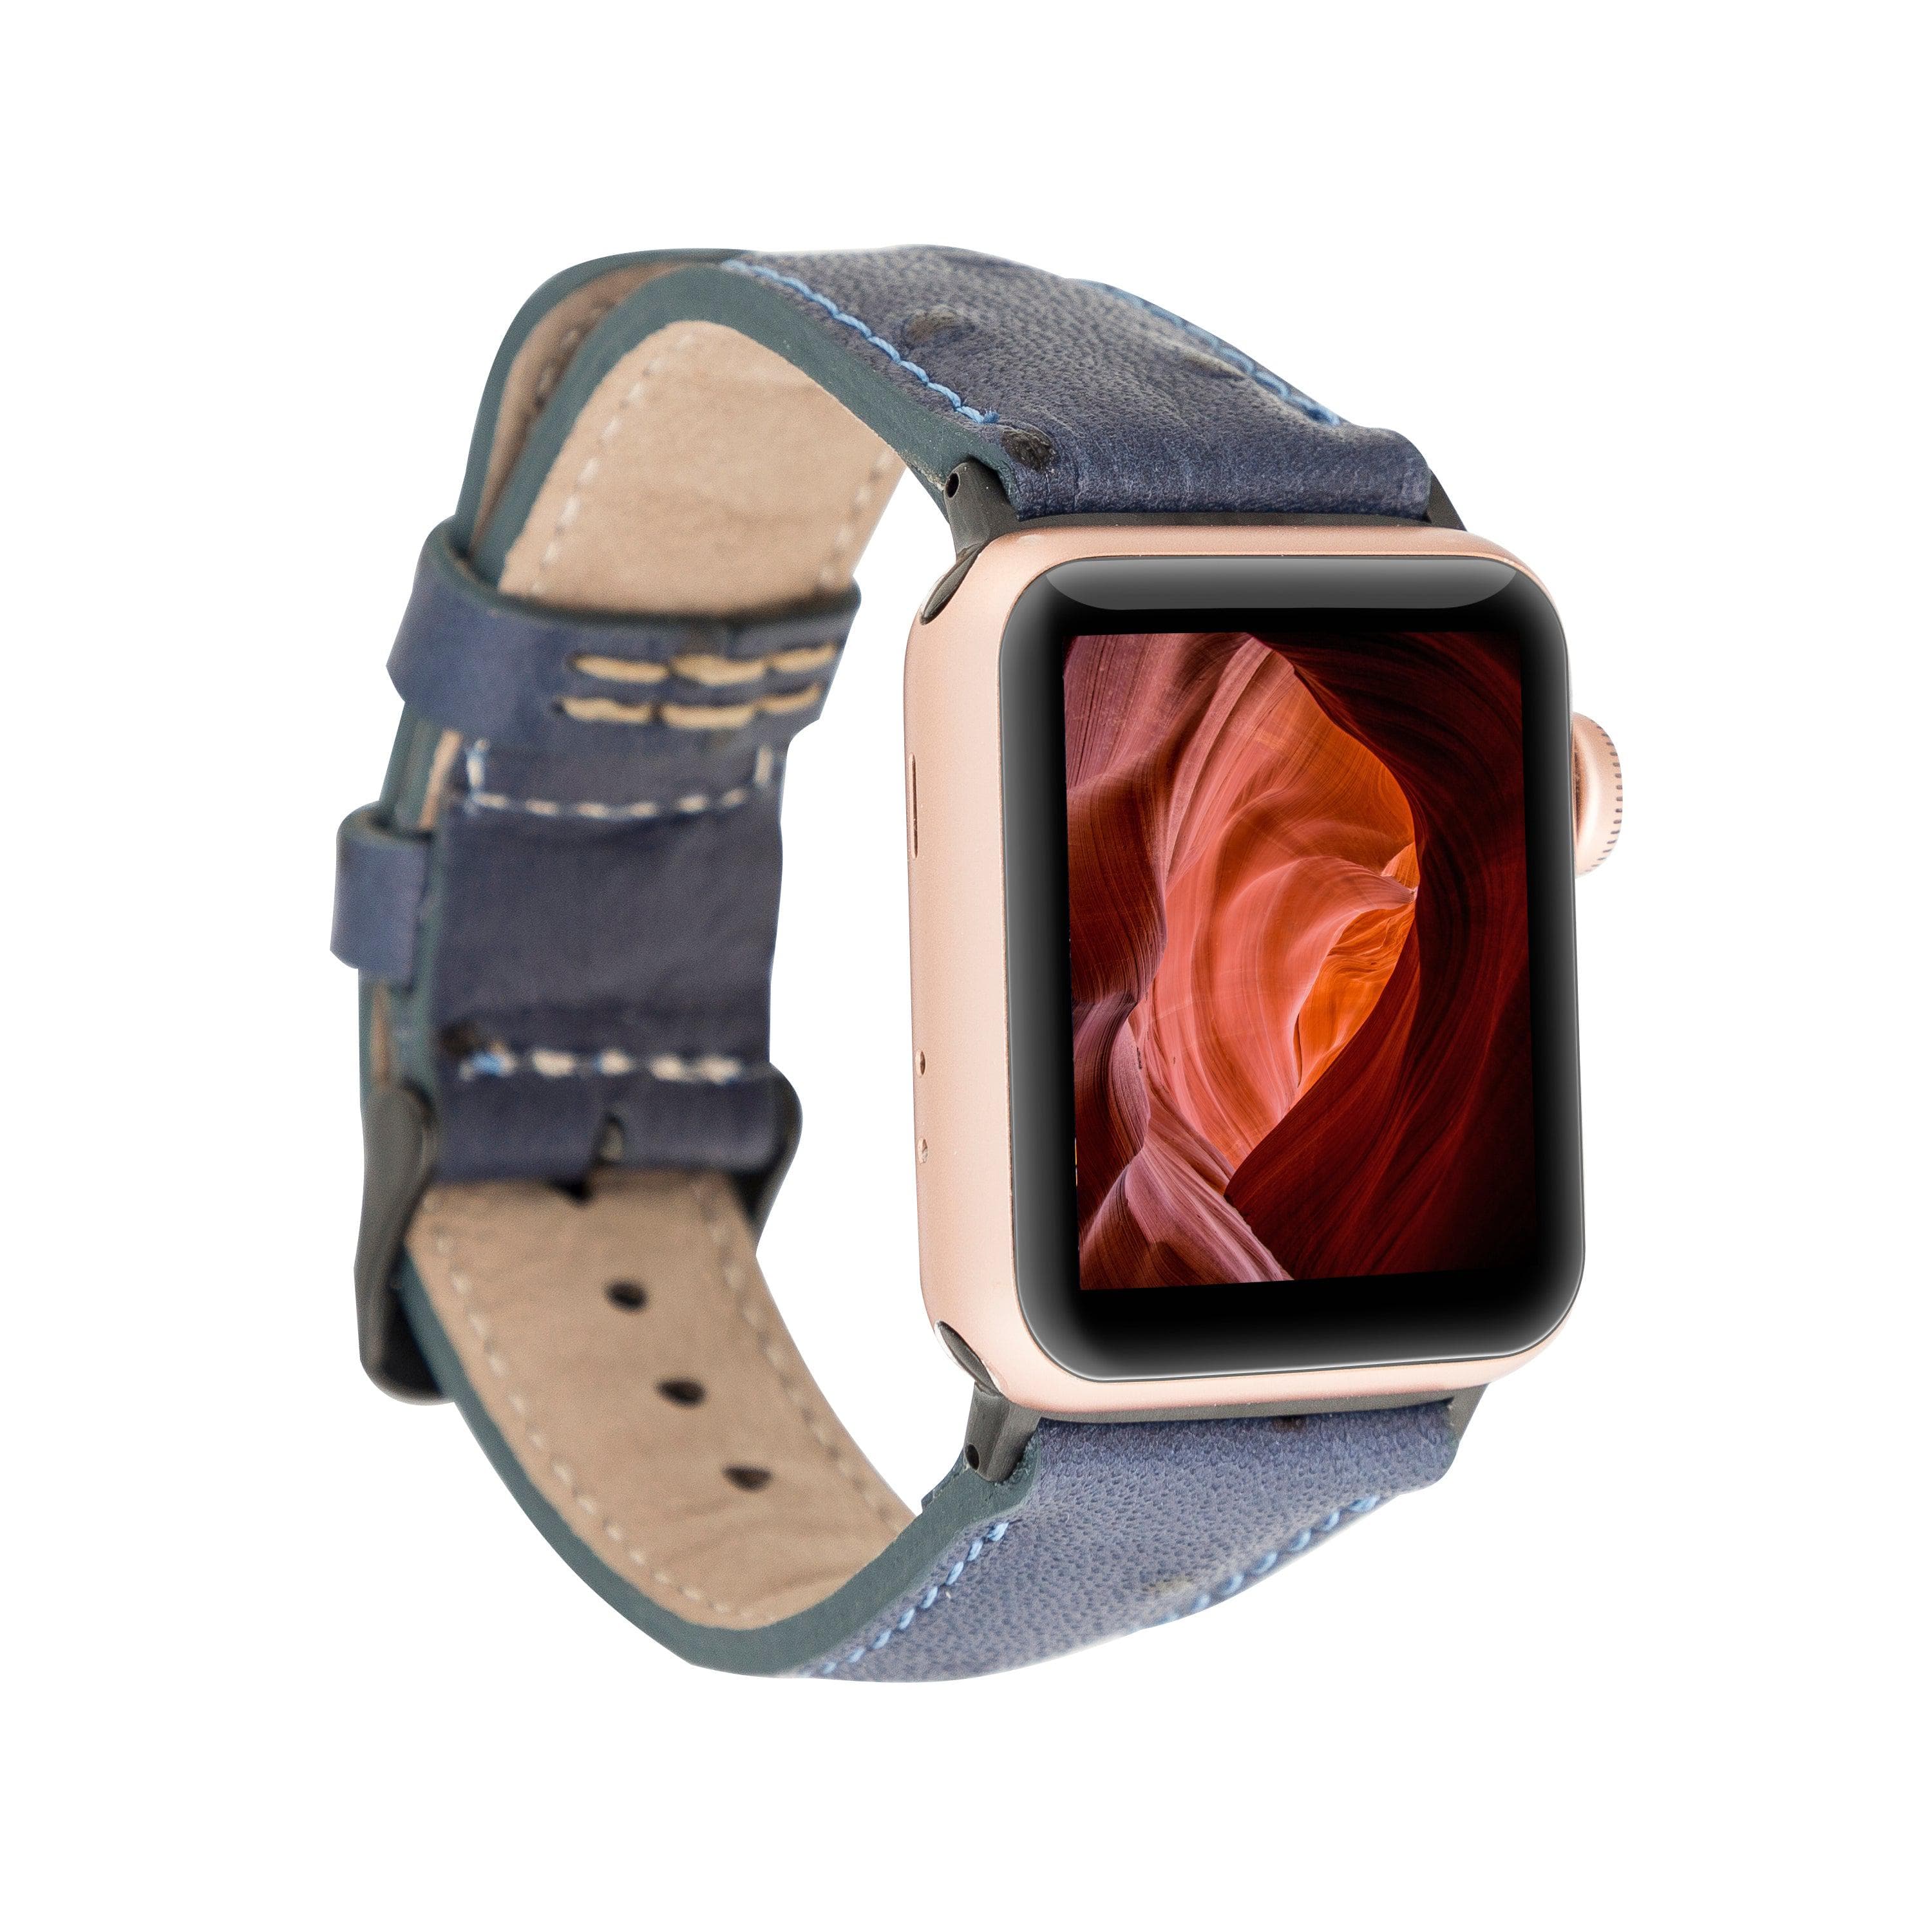 Cardiff Classic Apple Watch Leather Straps Bornbor